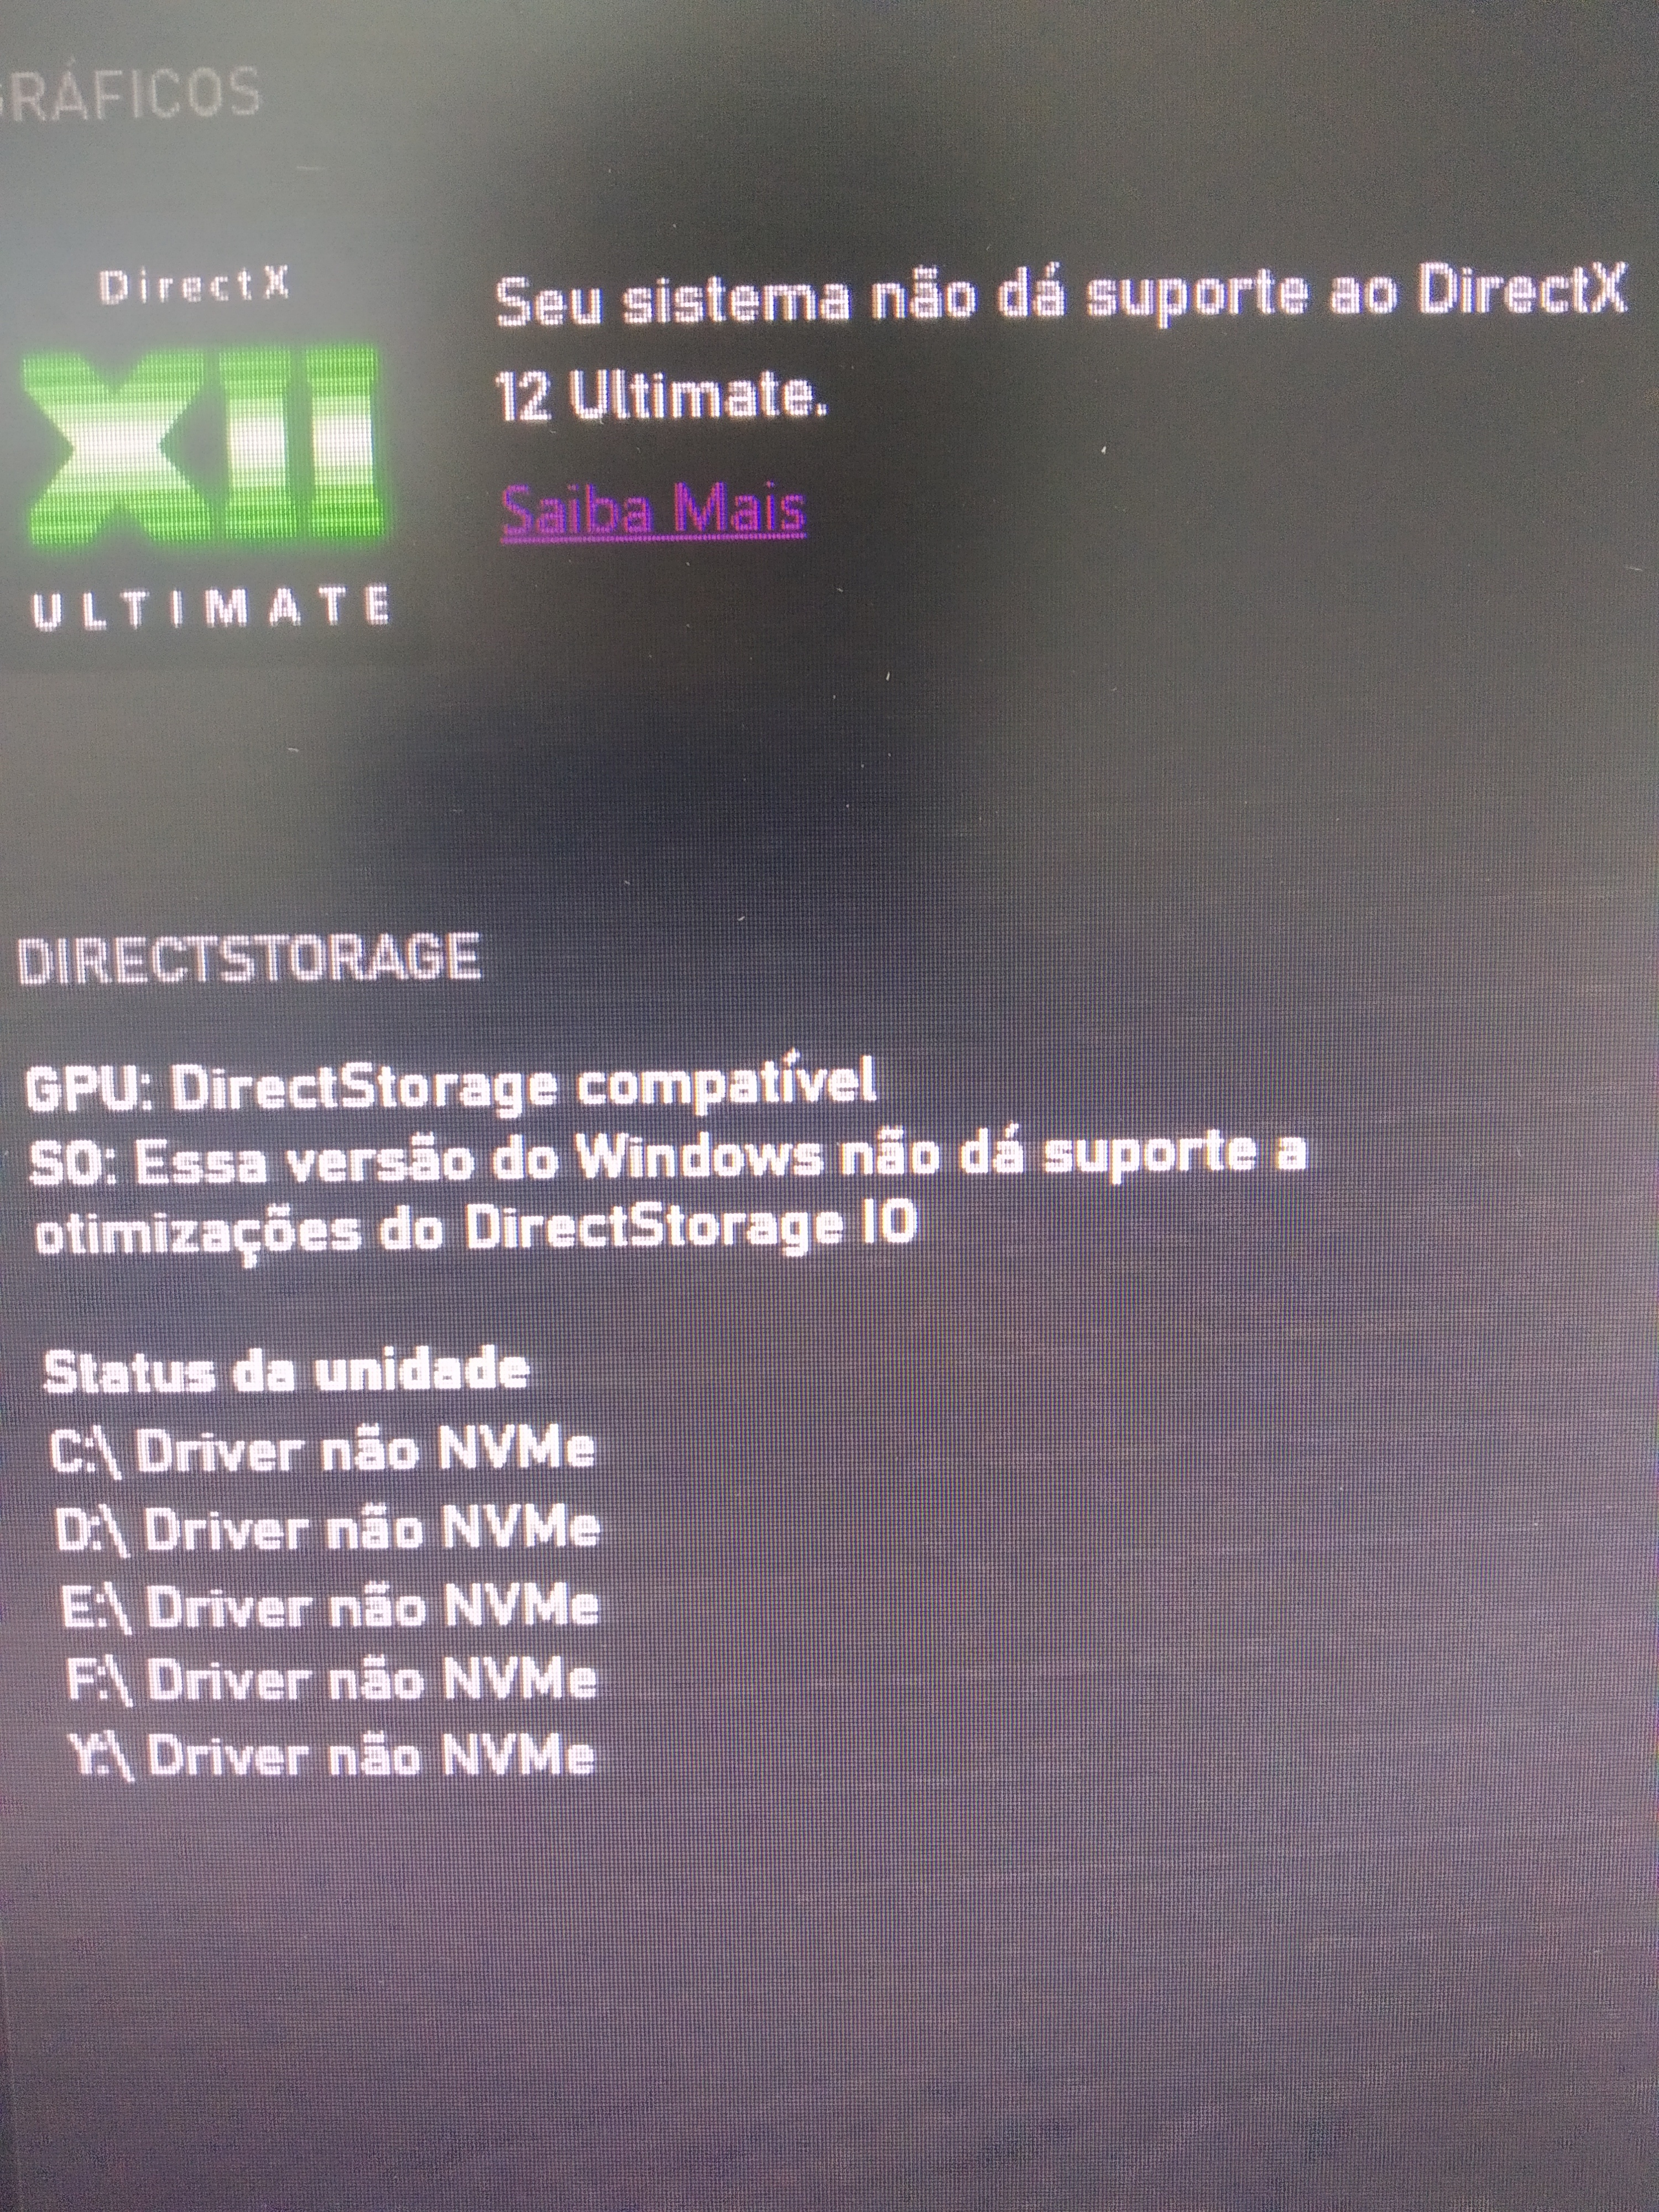 Where is DirectX 12? - Microsoft Community